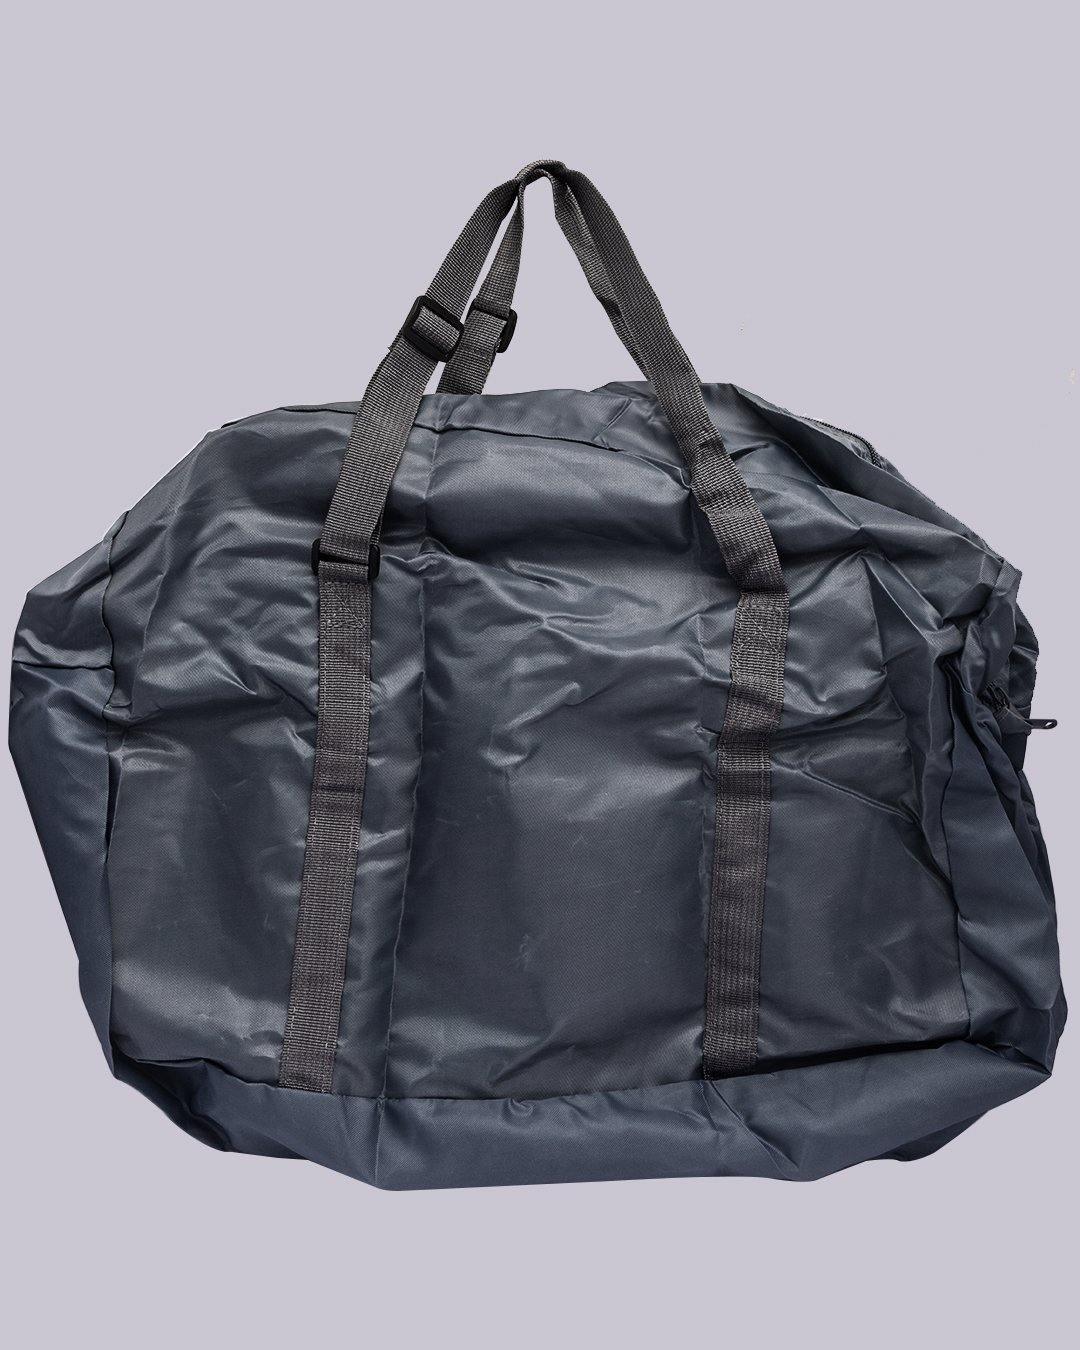 Travel Bag, Green, Plastic - MARKET 99